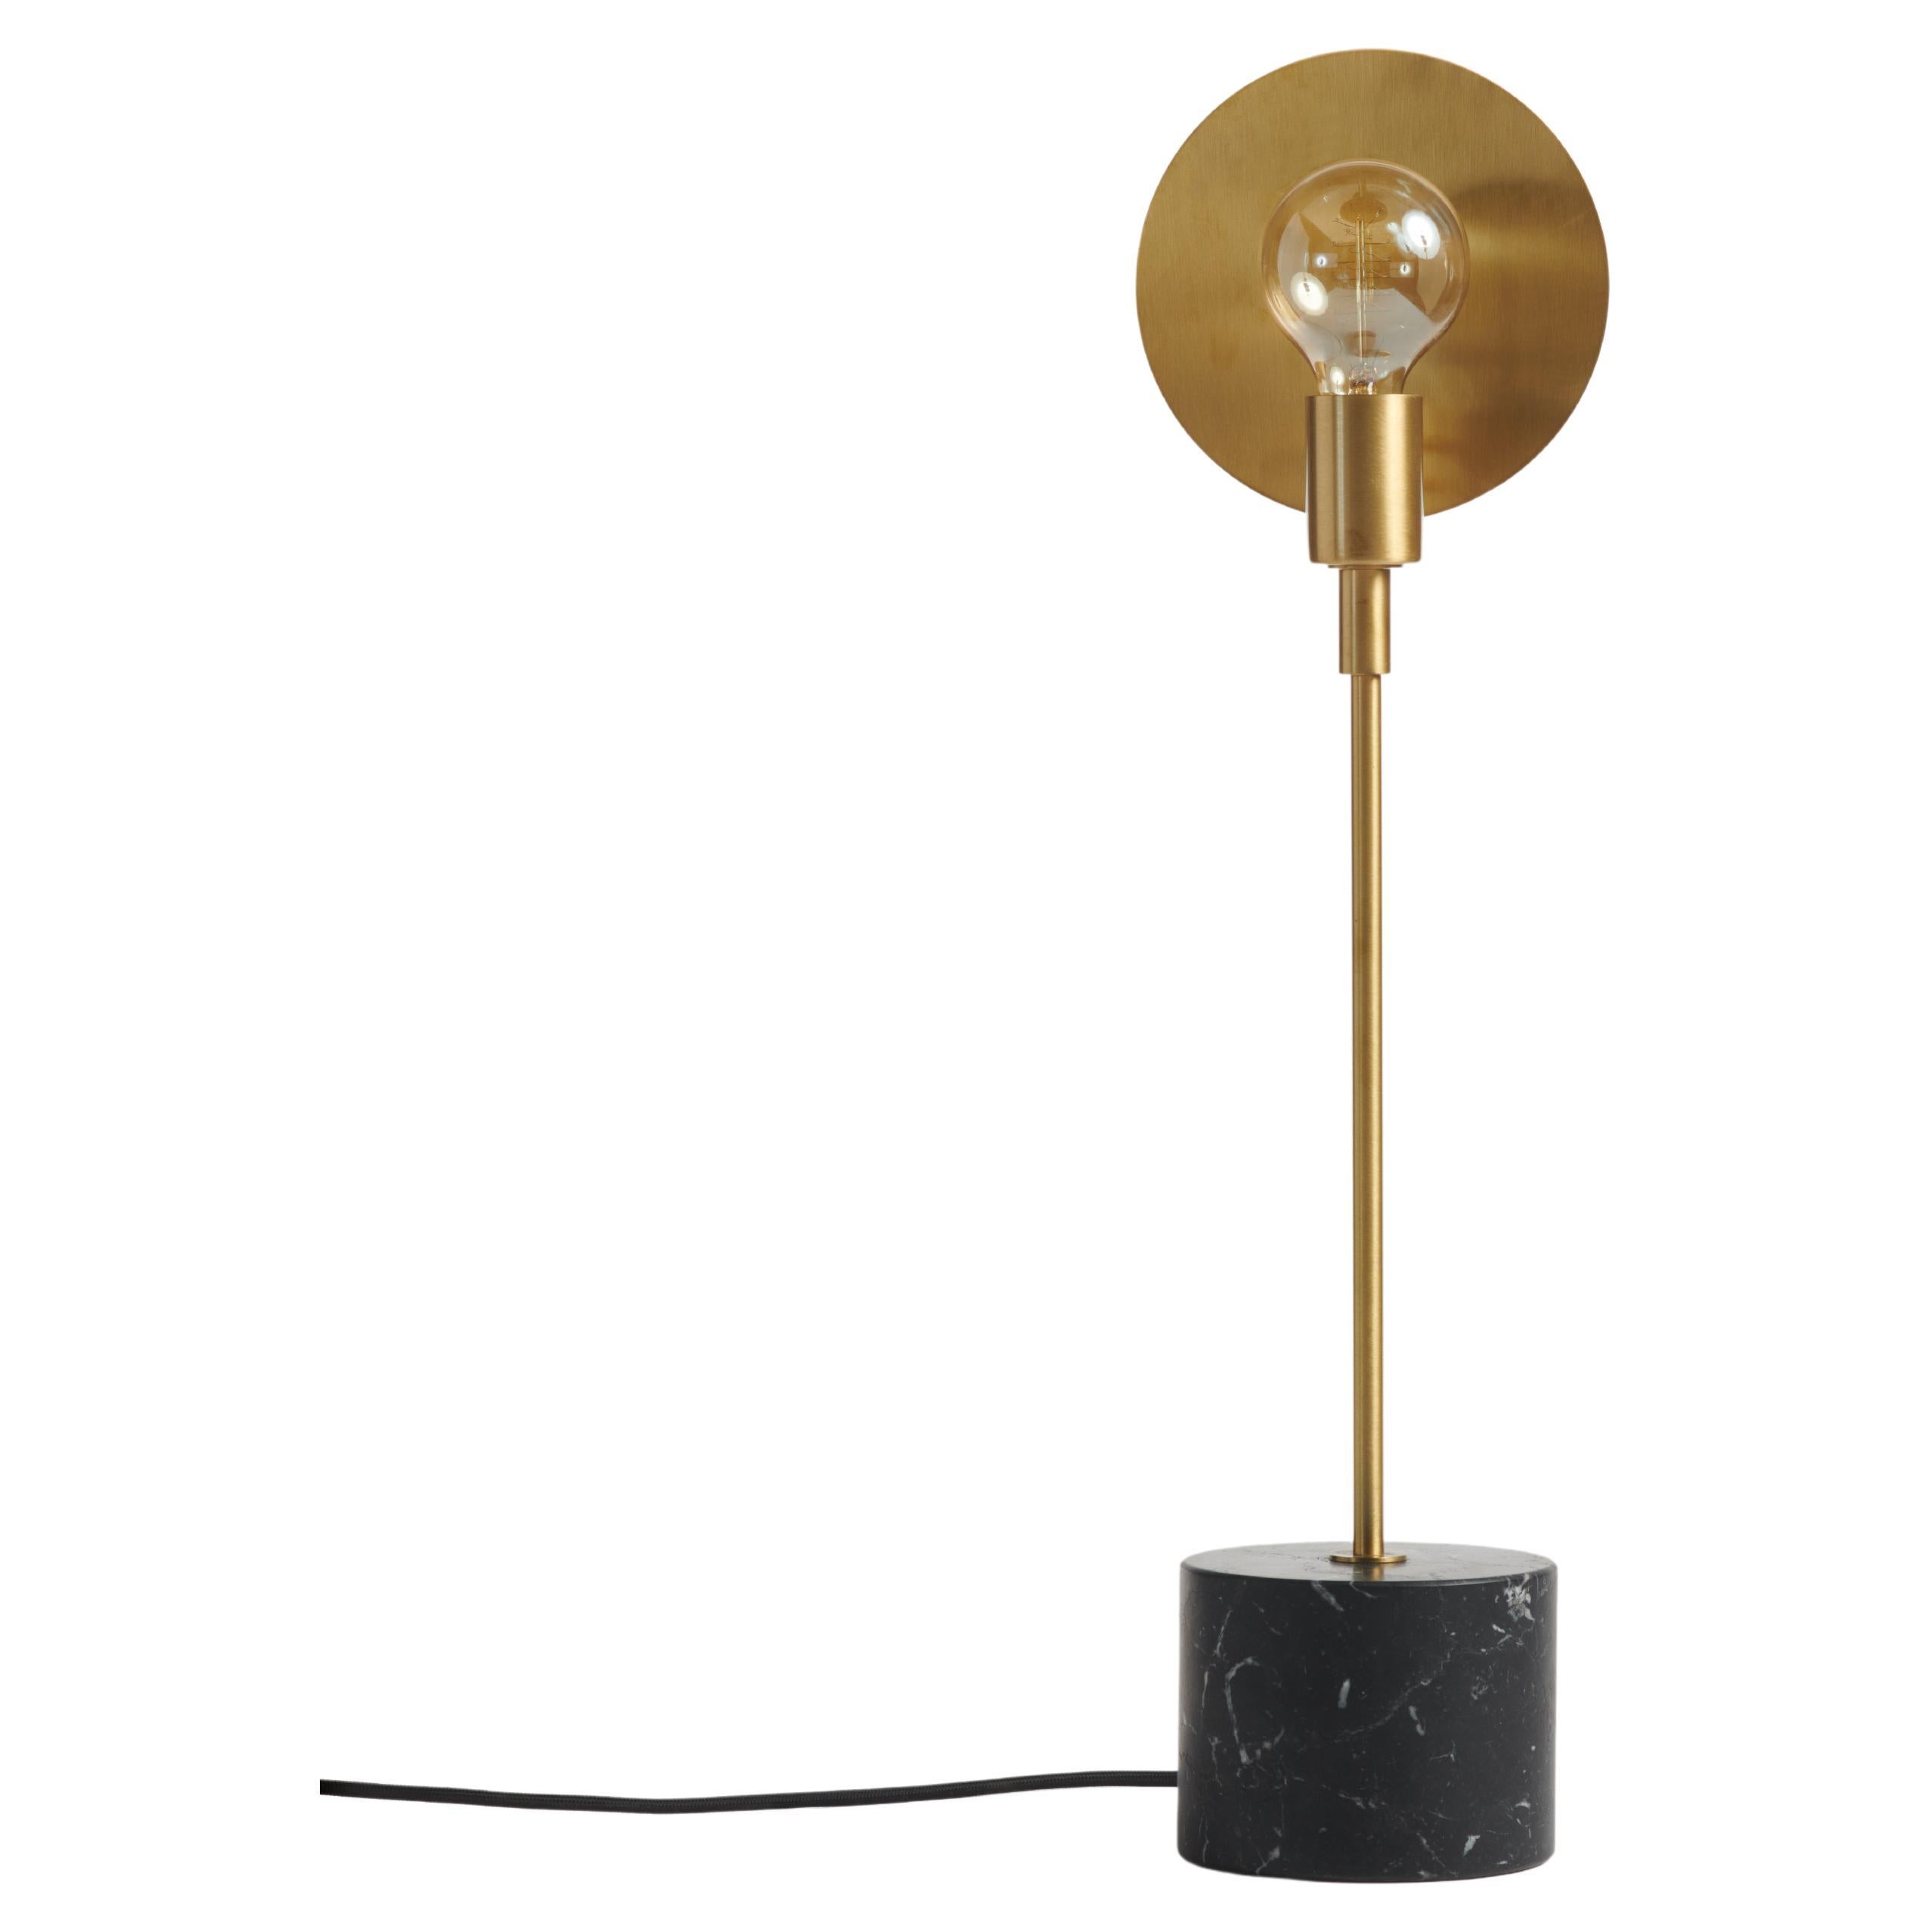 Essential Italian Table Lamp "Vanessa", in satin brass and Black Marble in vendita